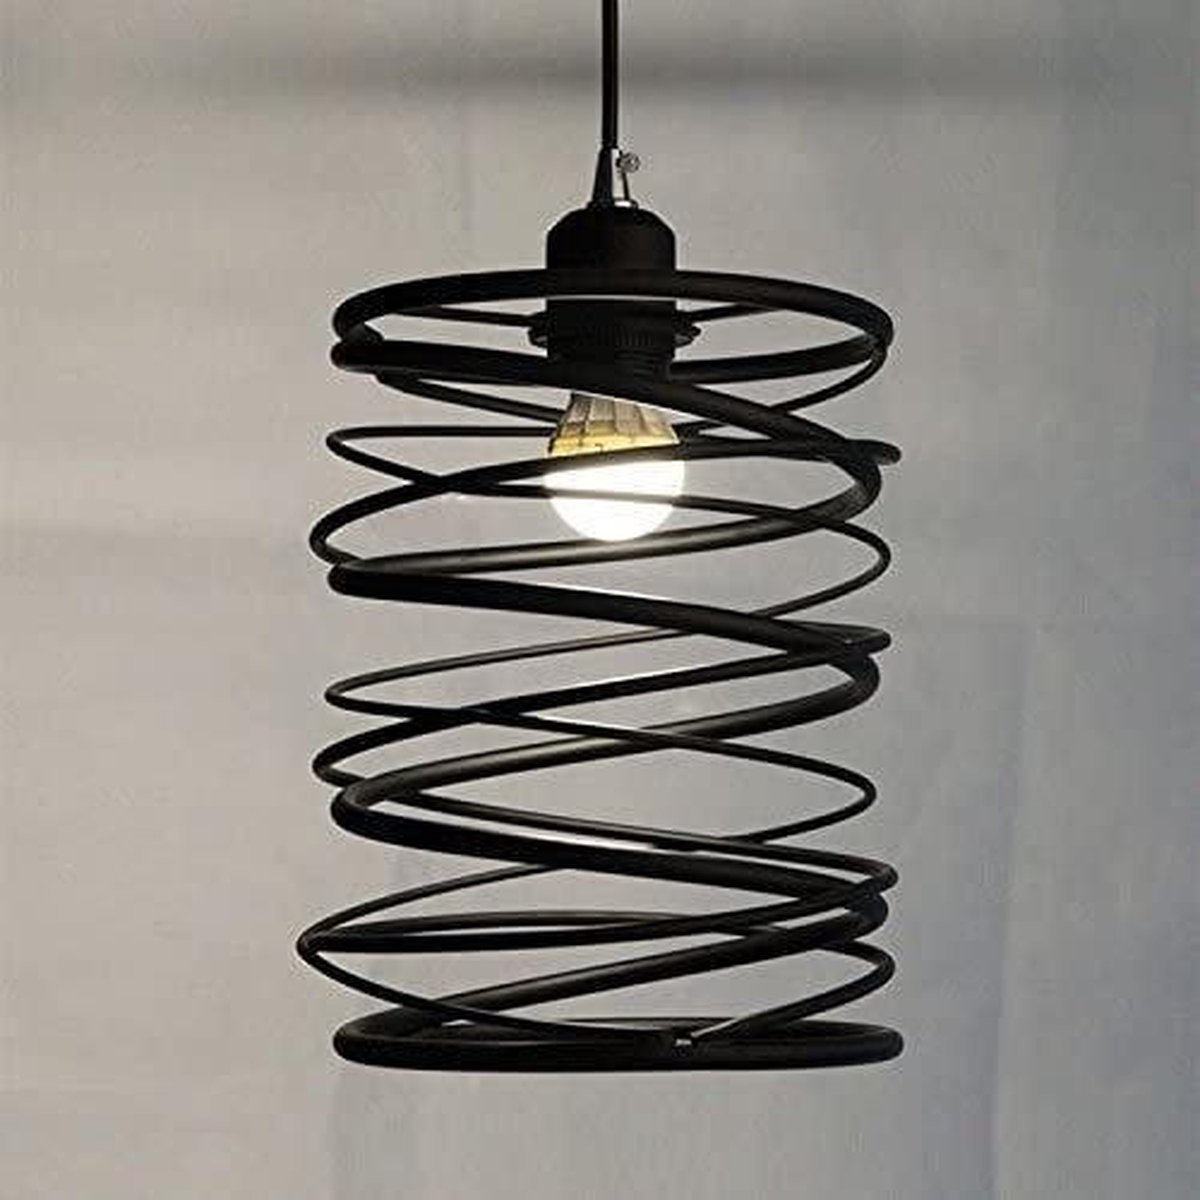 Spring Industrieel Design Hanglamp - E27 Fitting - ø20x35cm - Messing / Zwart